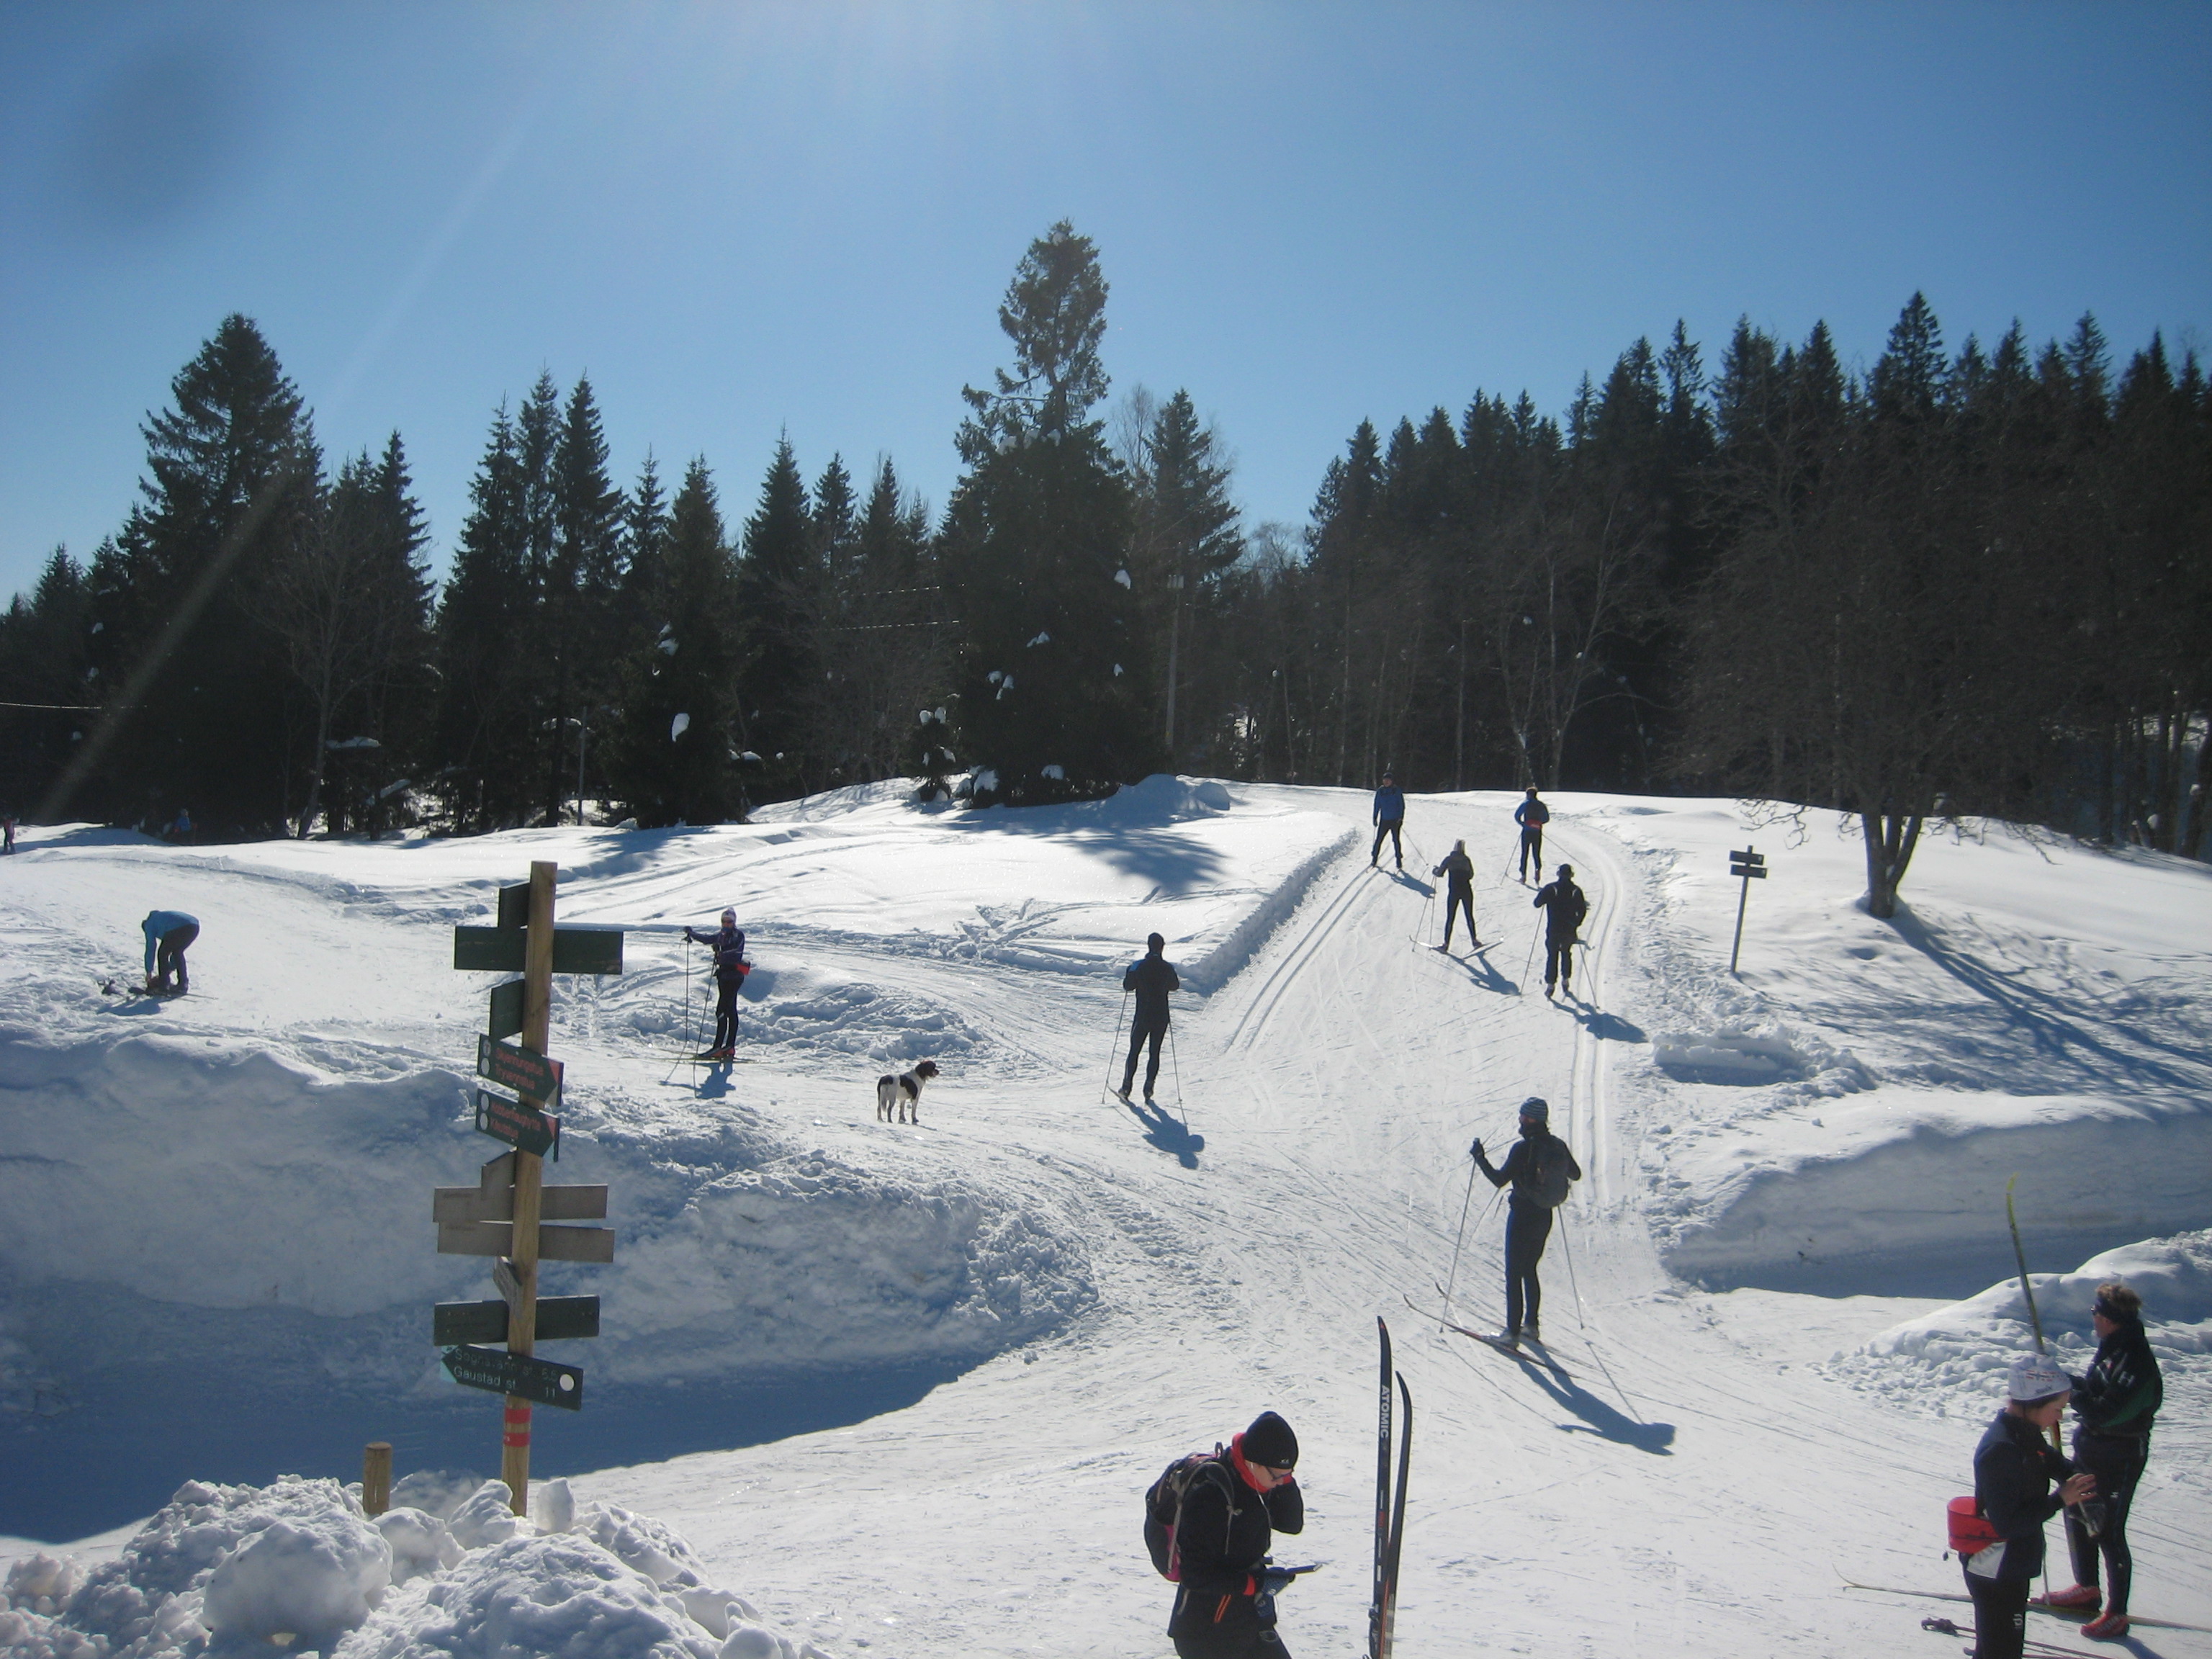 masse snø kryss med skiløpere